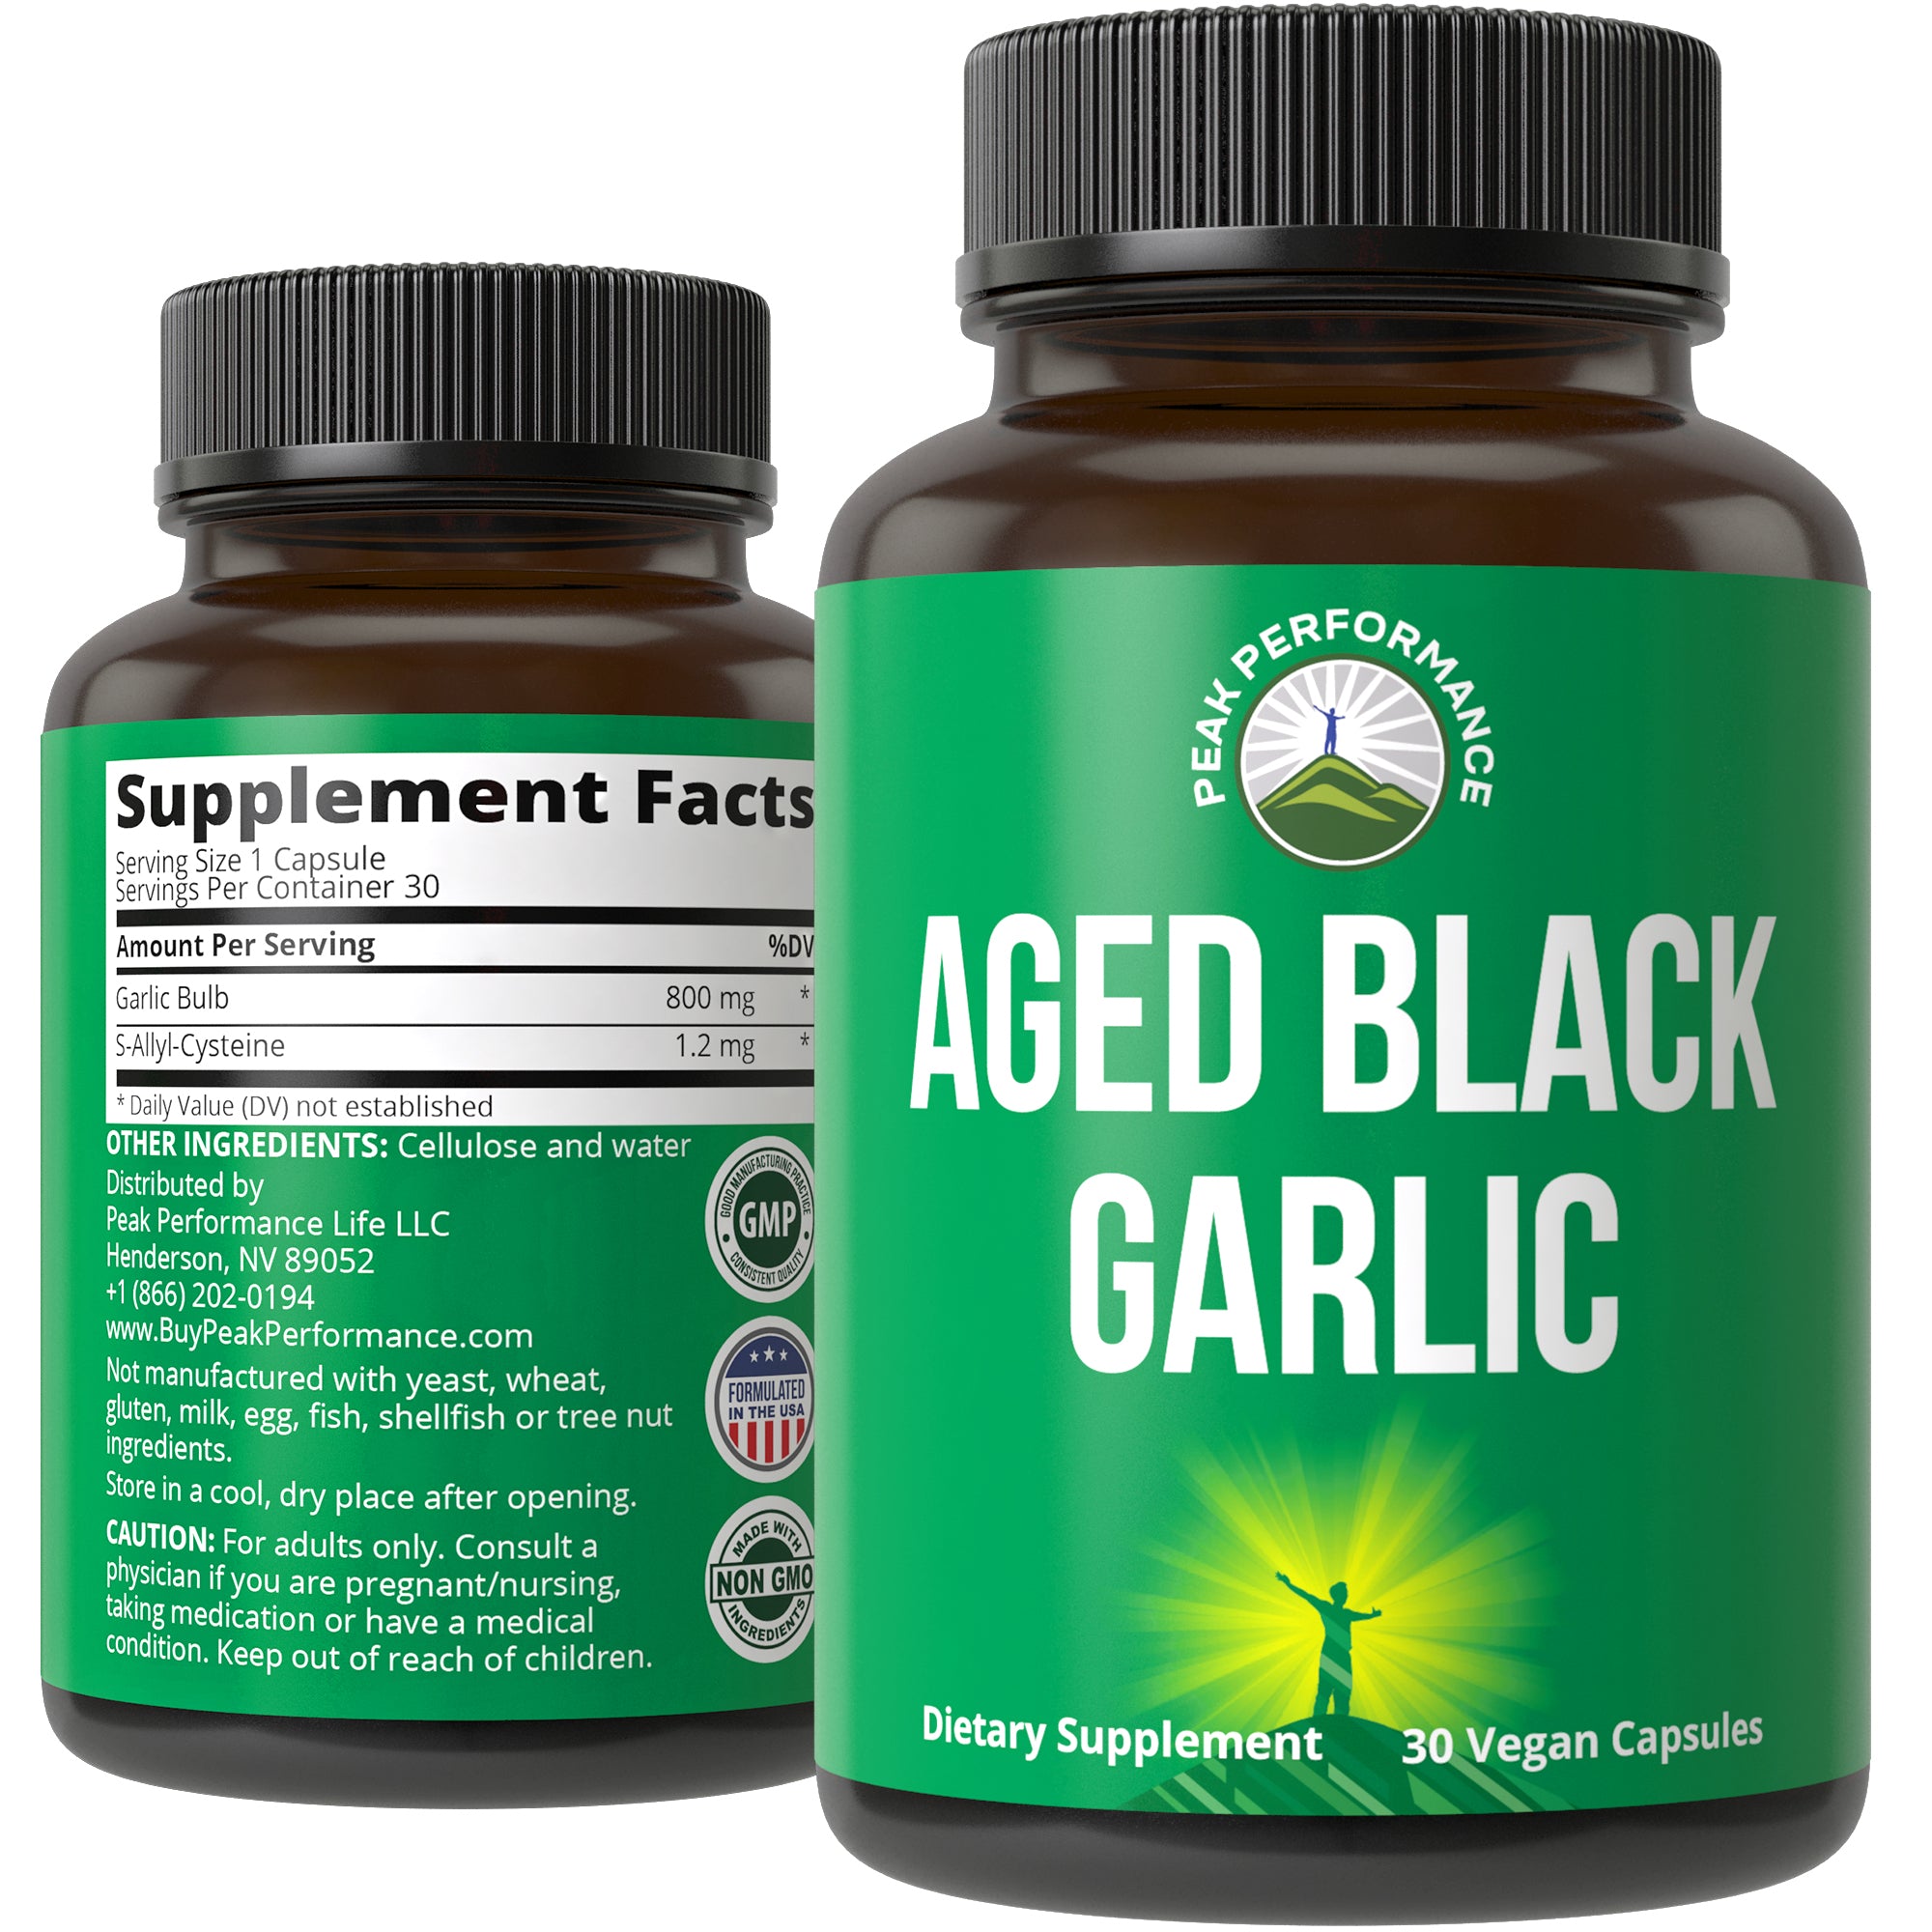 Aged Black Garlic Capsules